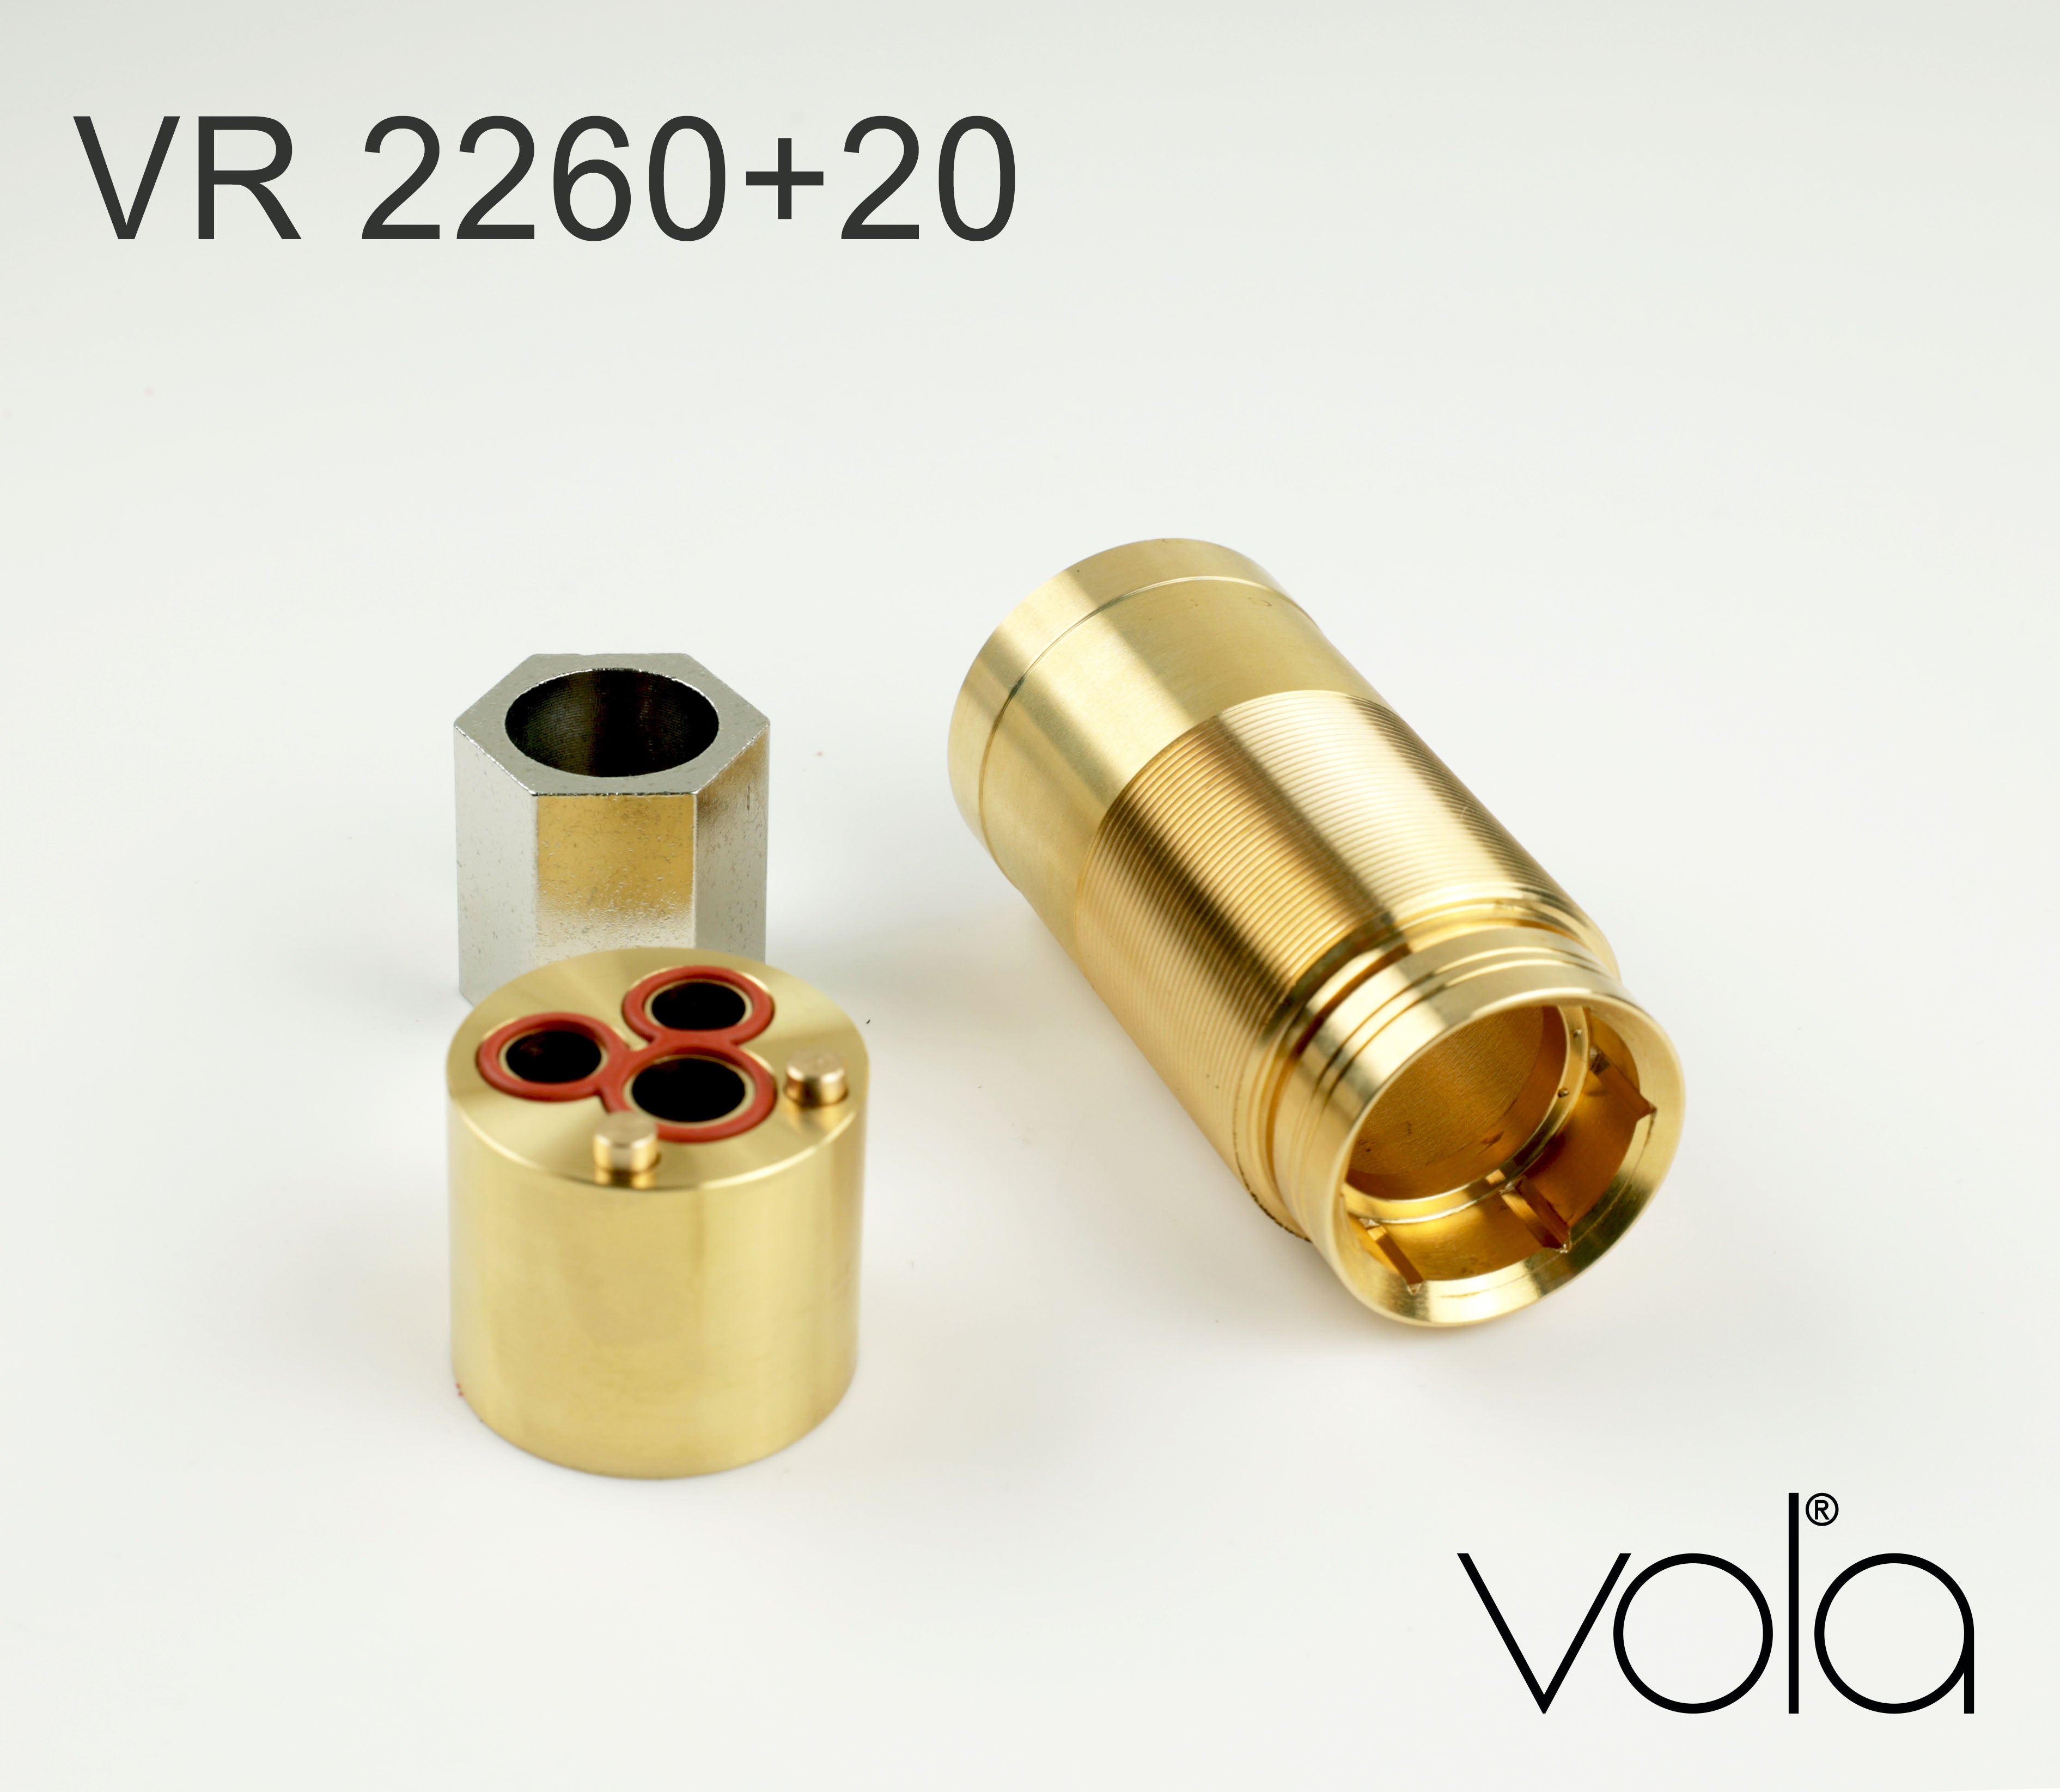 VOLA VR2260+20